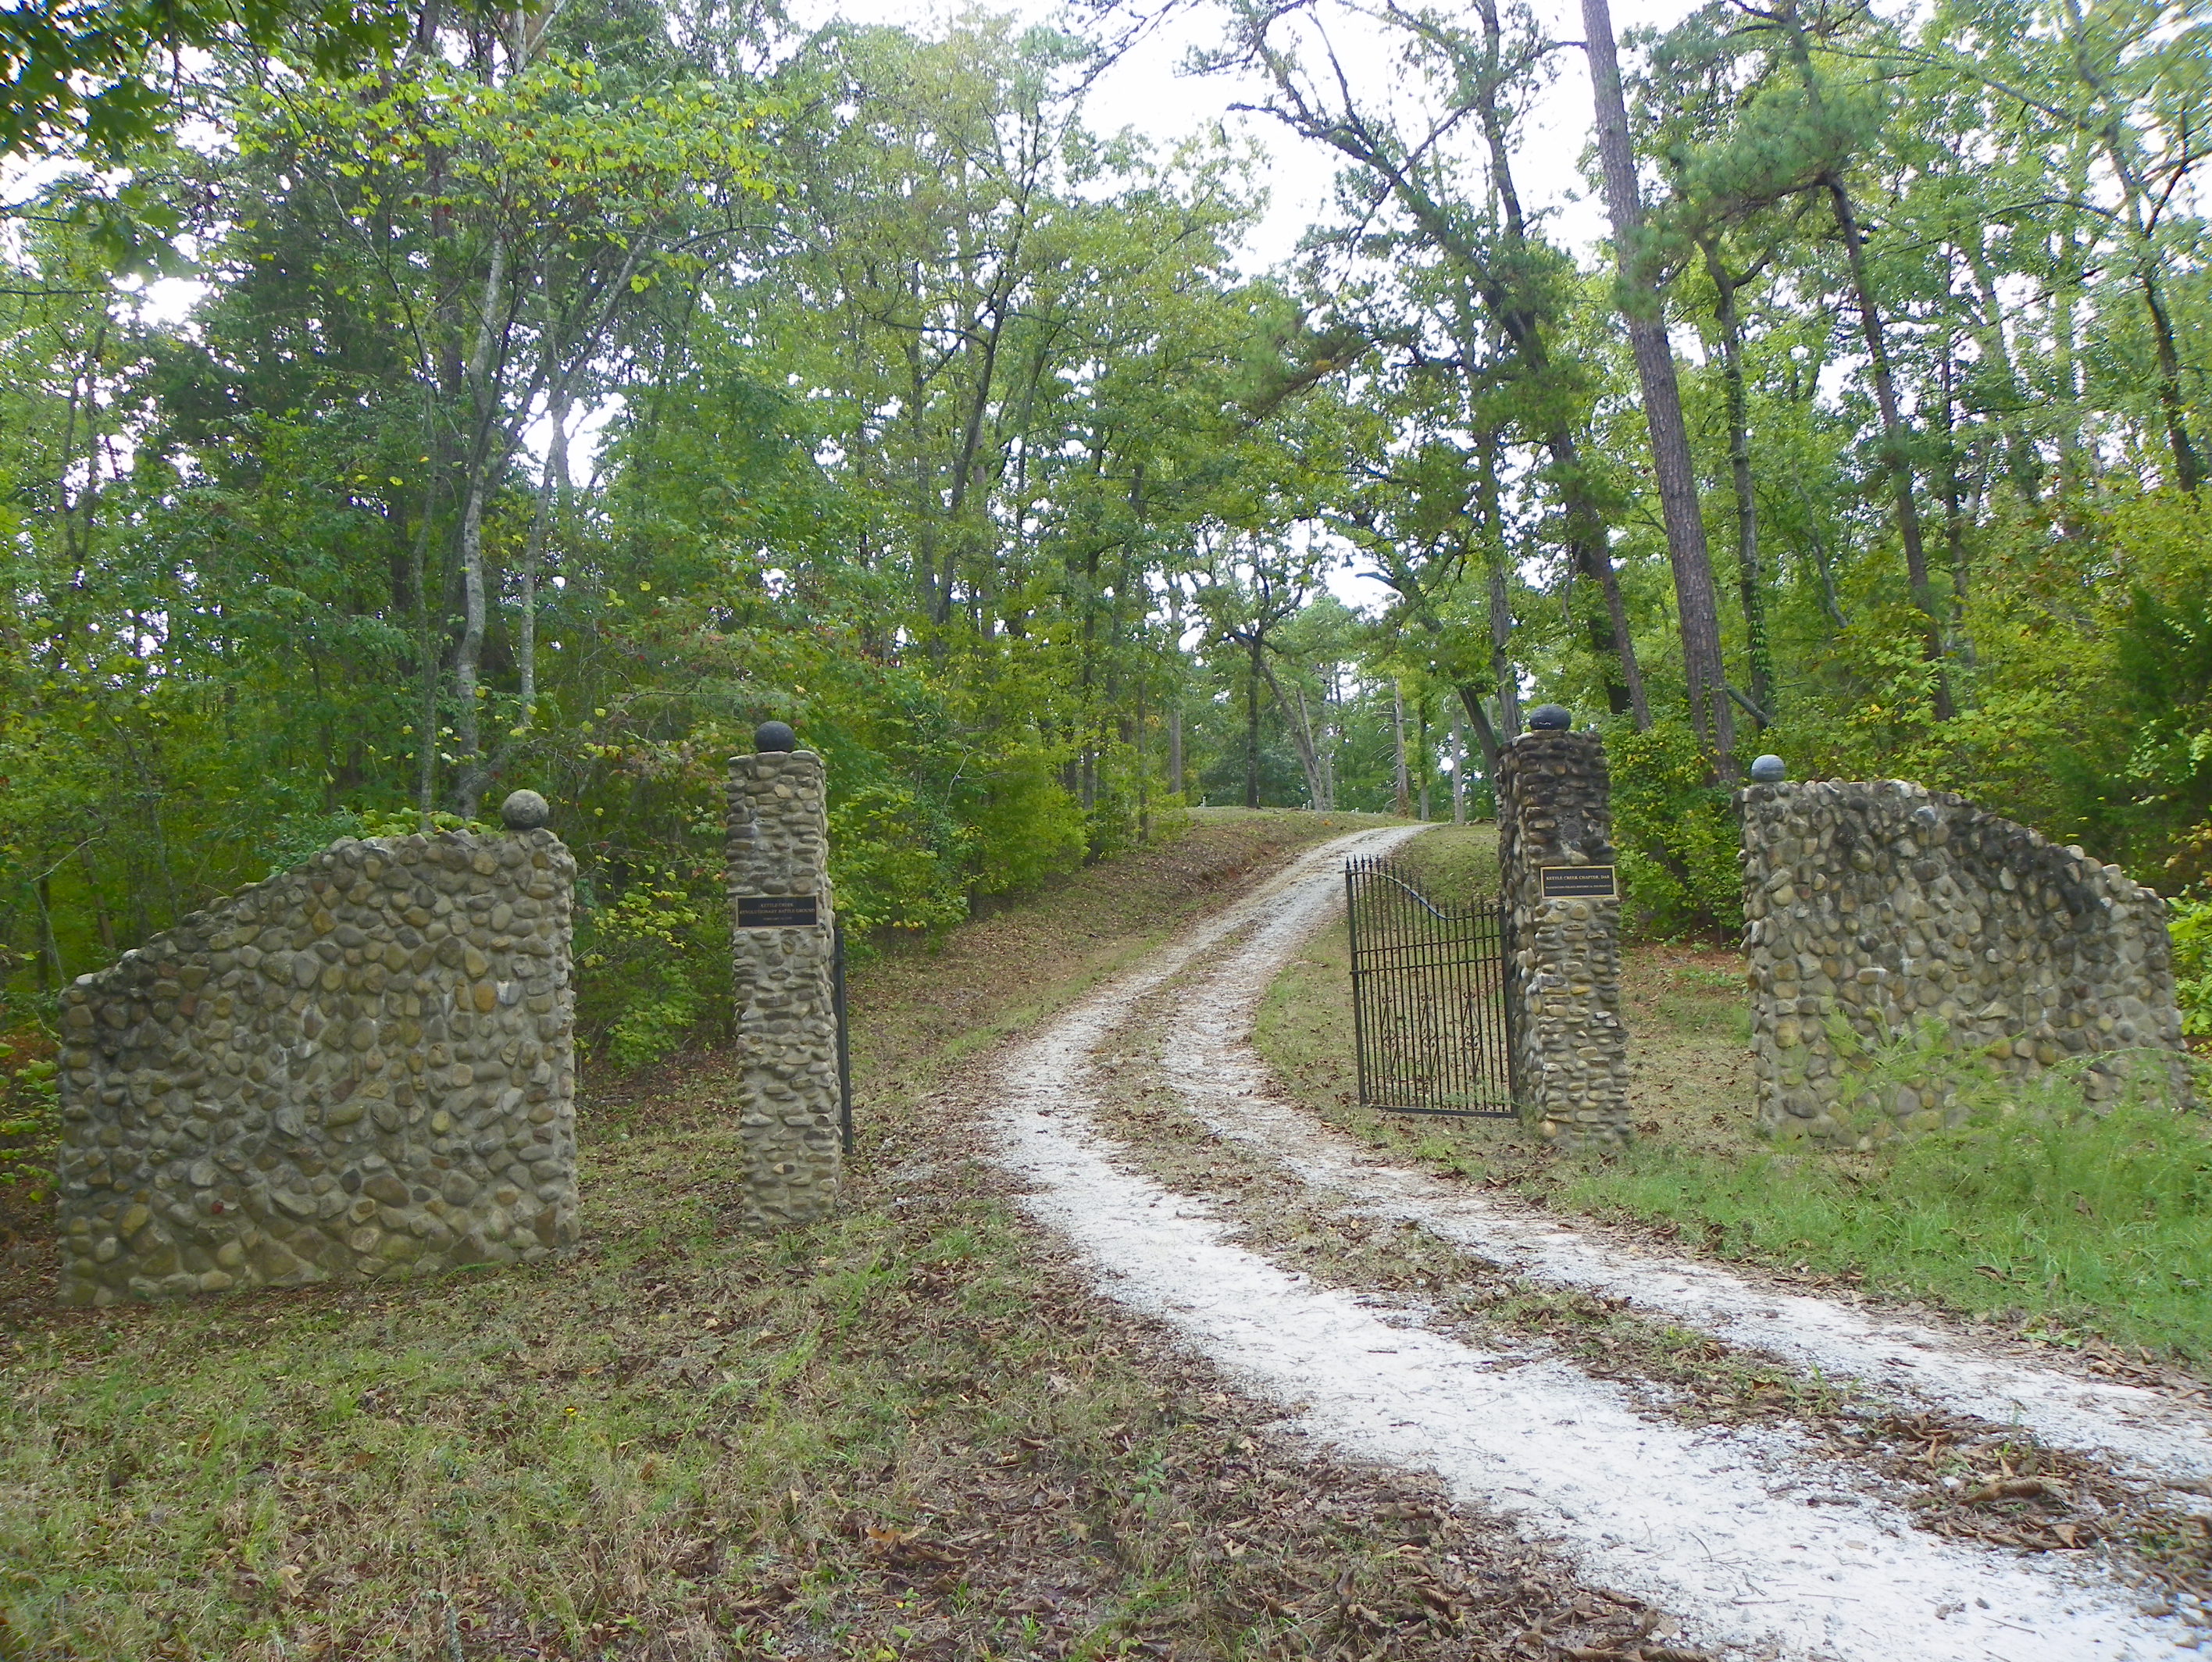 Kettle Creek Battlefield from the Revolutionary War